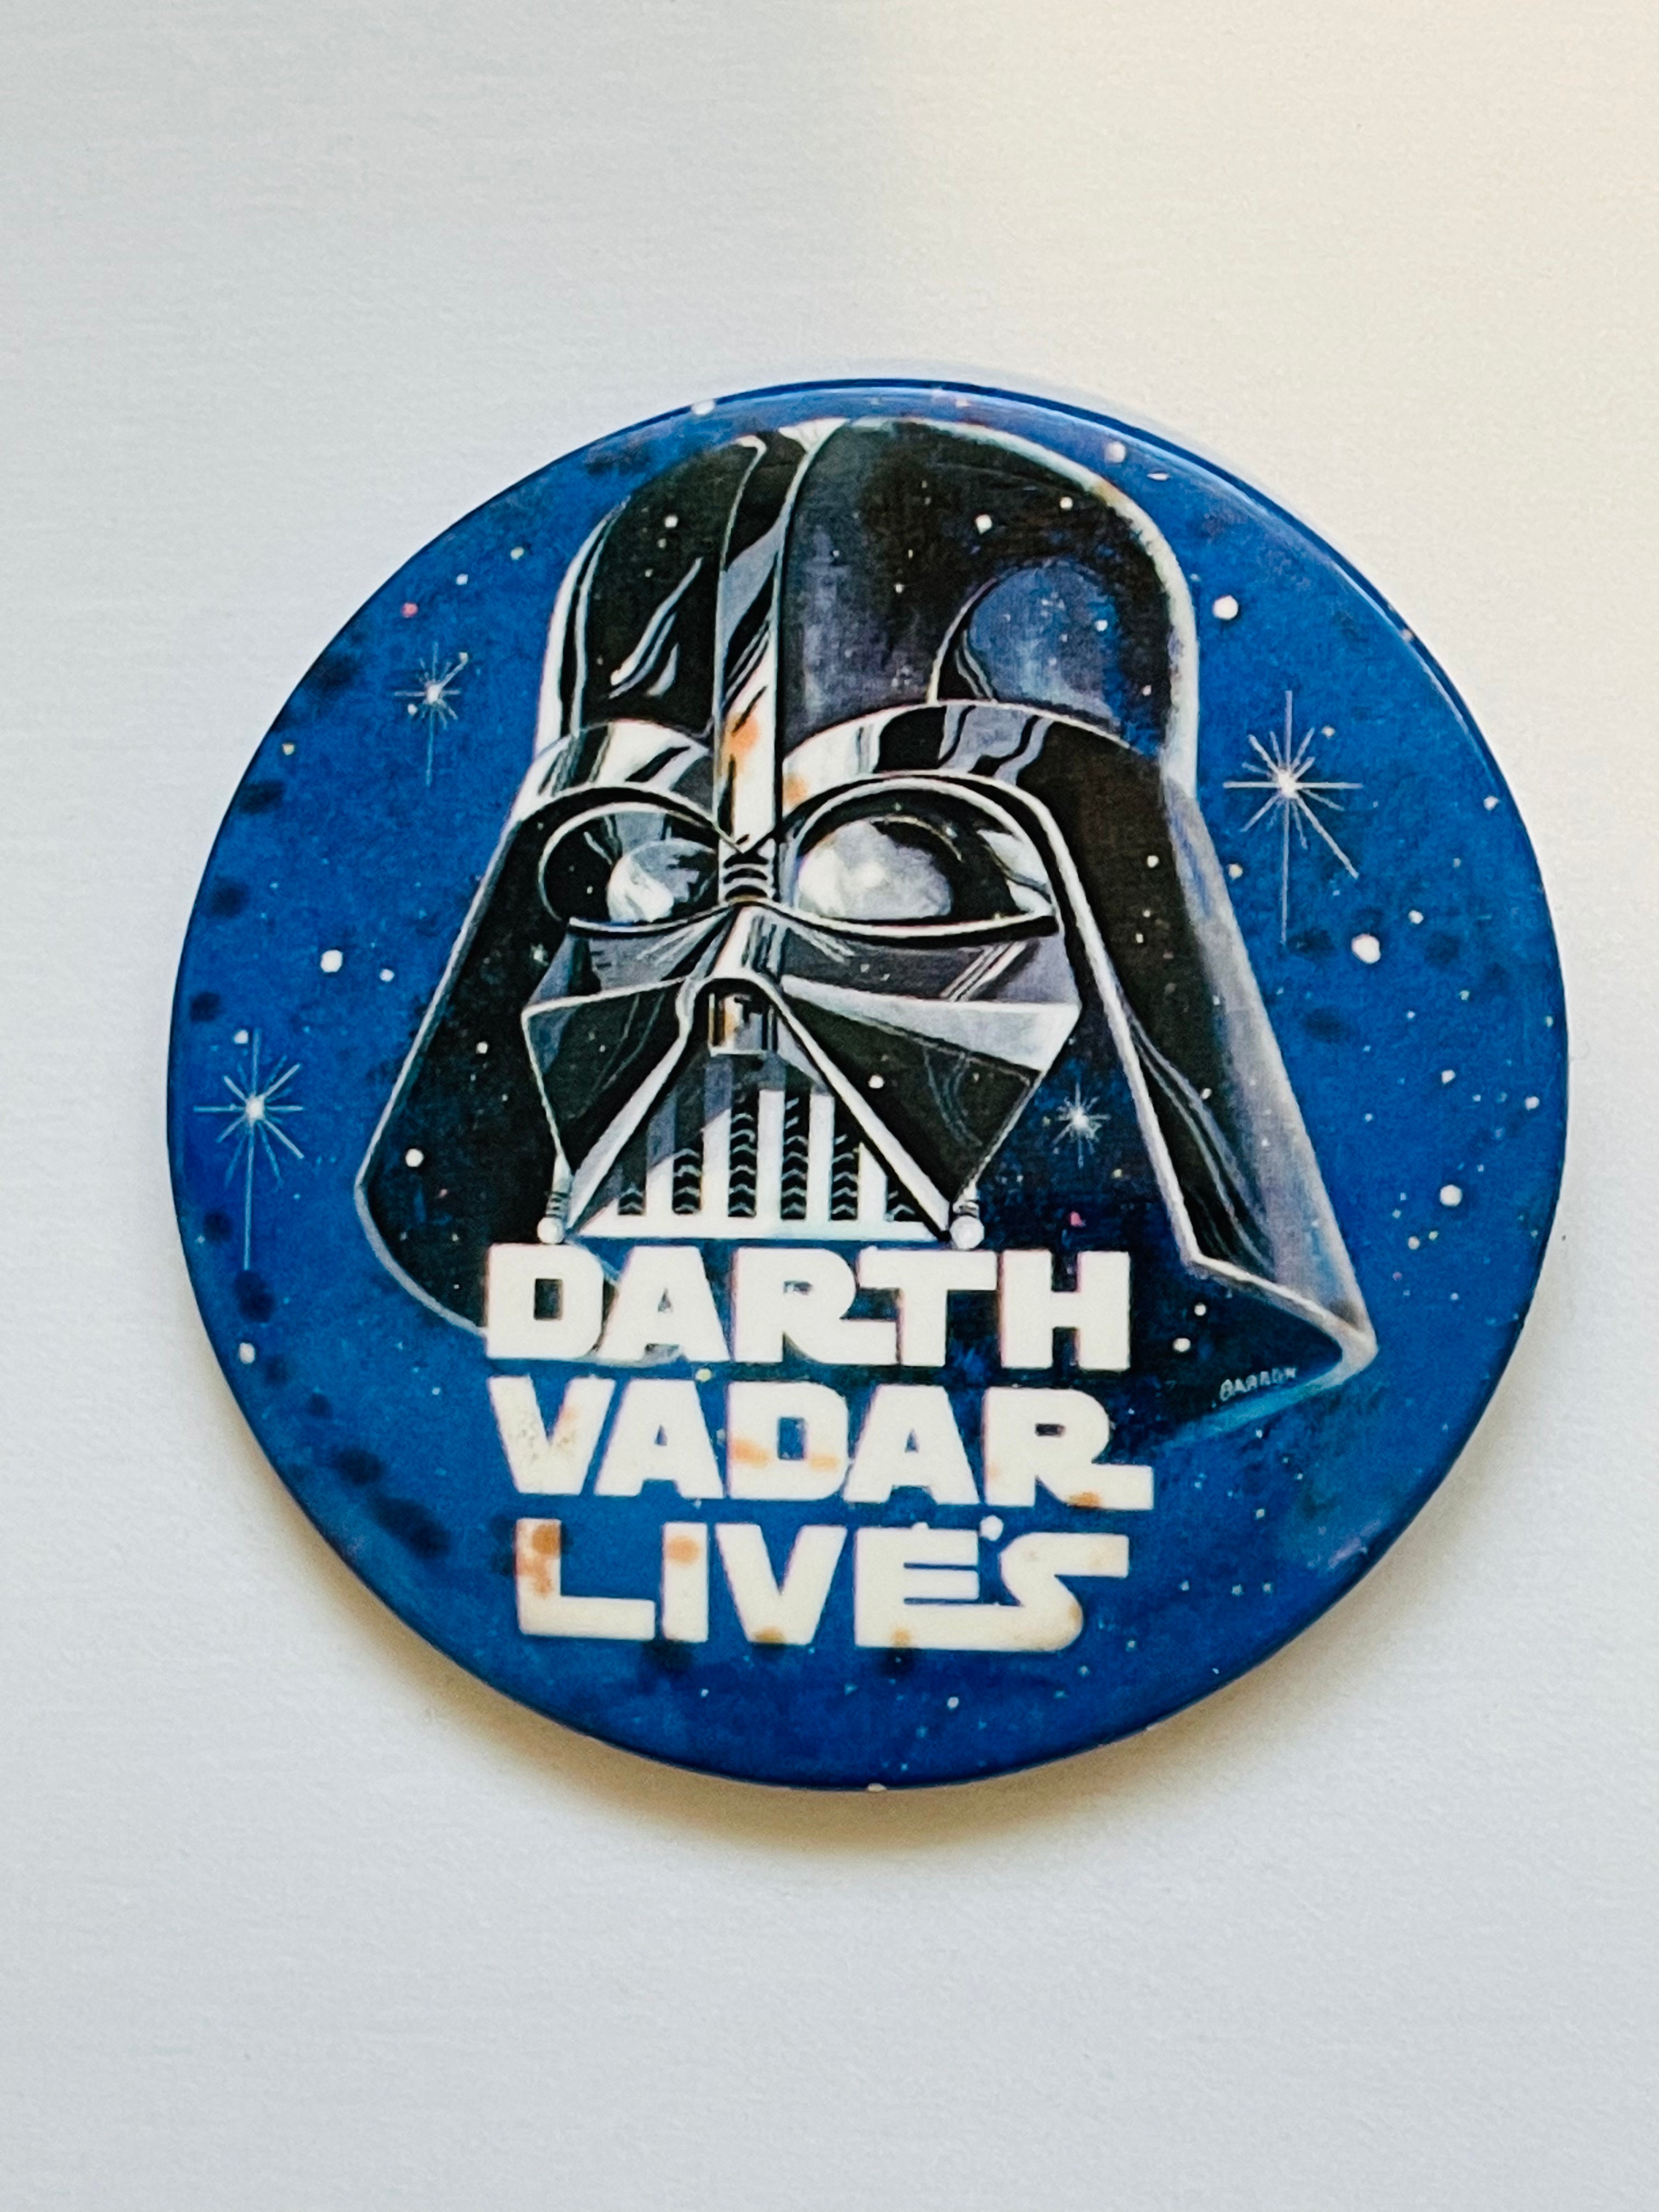 Star Wars rare Darth Vader Lives 3x3 button 1981